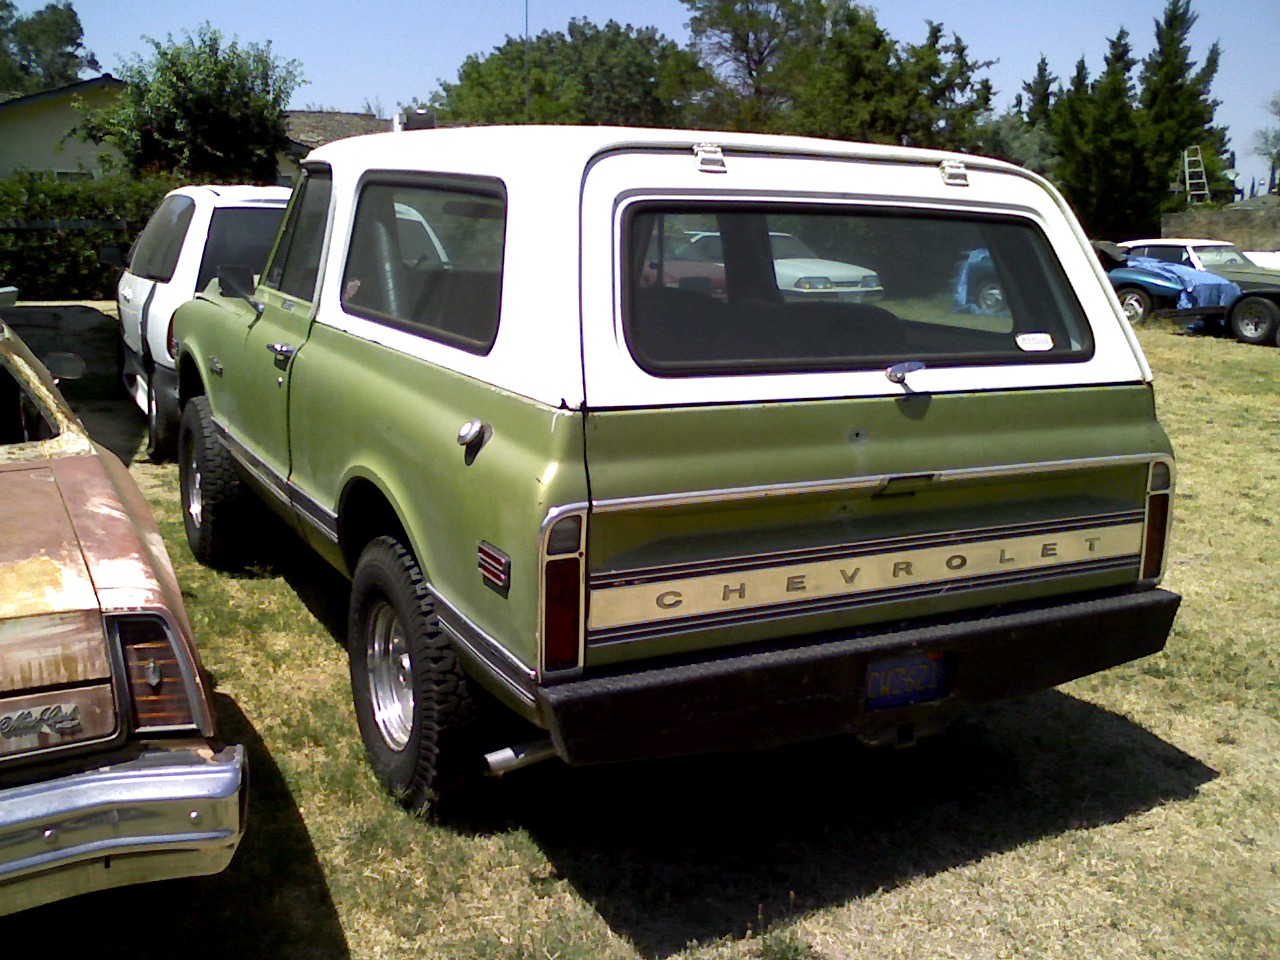 1972 Chevrolet K5 Blazer Backgrounds on Wallpapers Vista